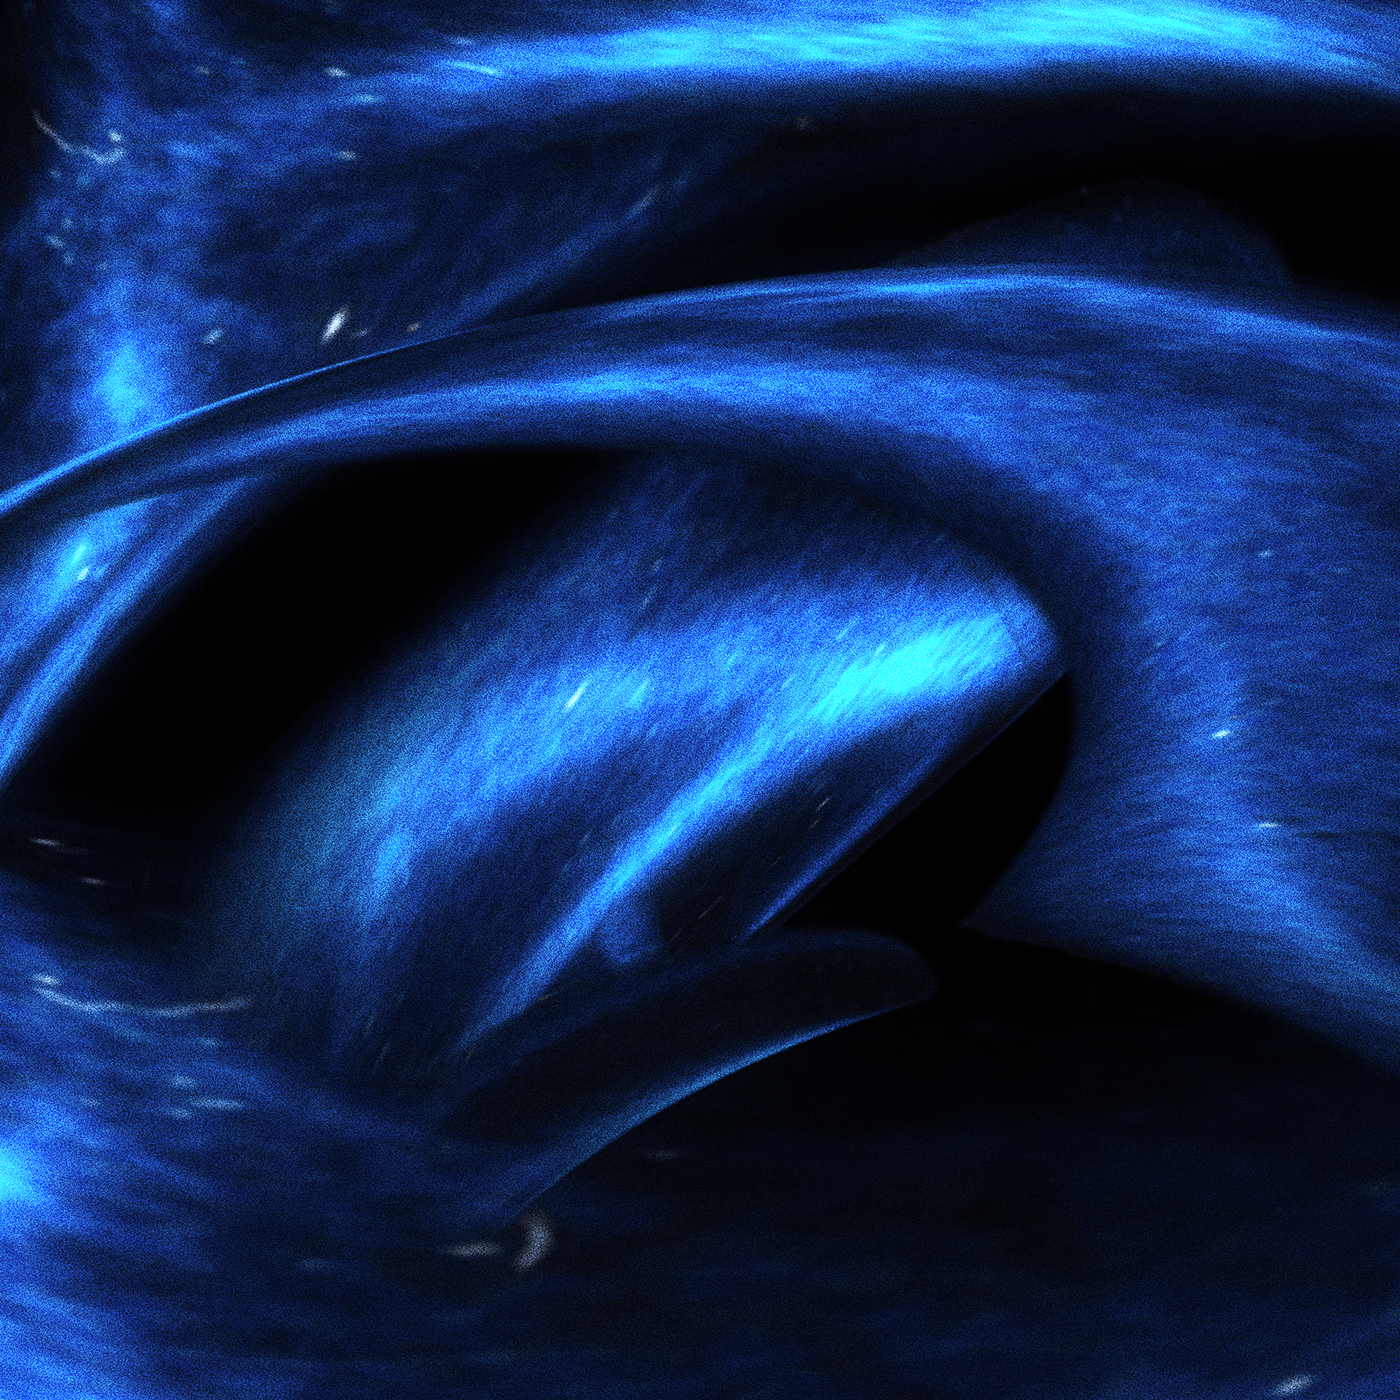 abstract Digital Art  light elbow anatomy scan blue Ocean underwater